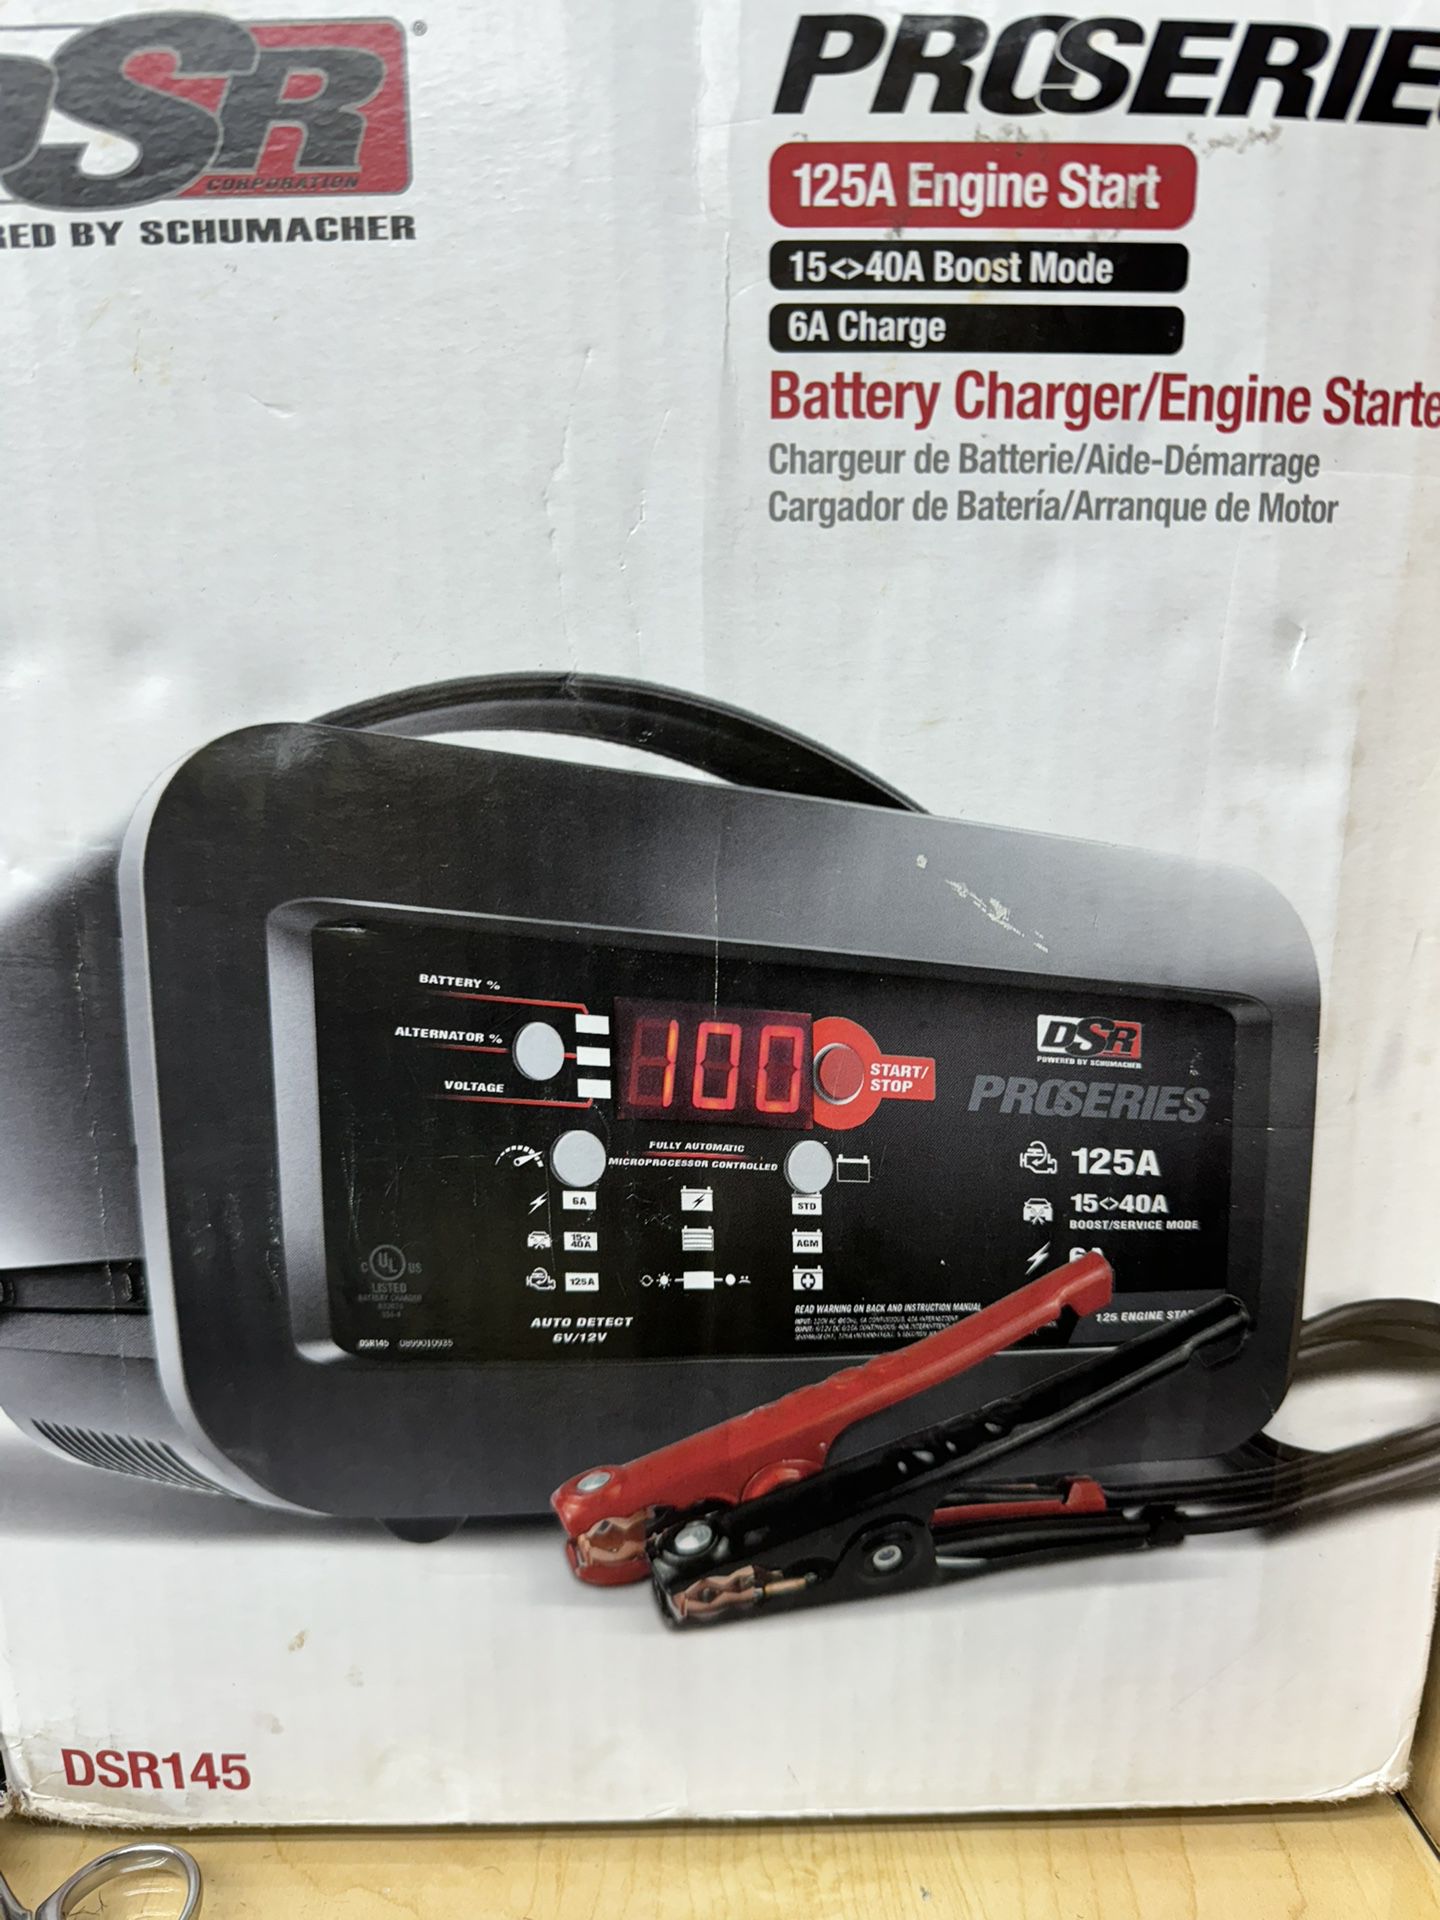 Battery Charger / Engine Starter